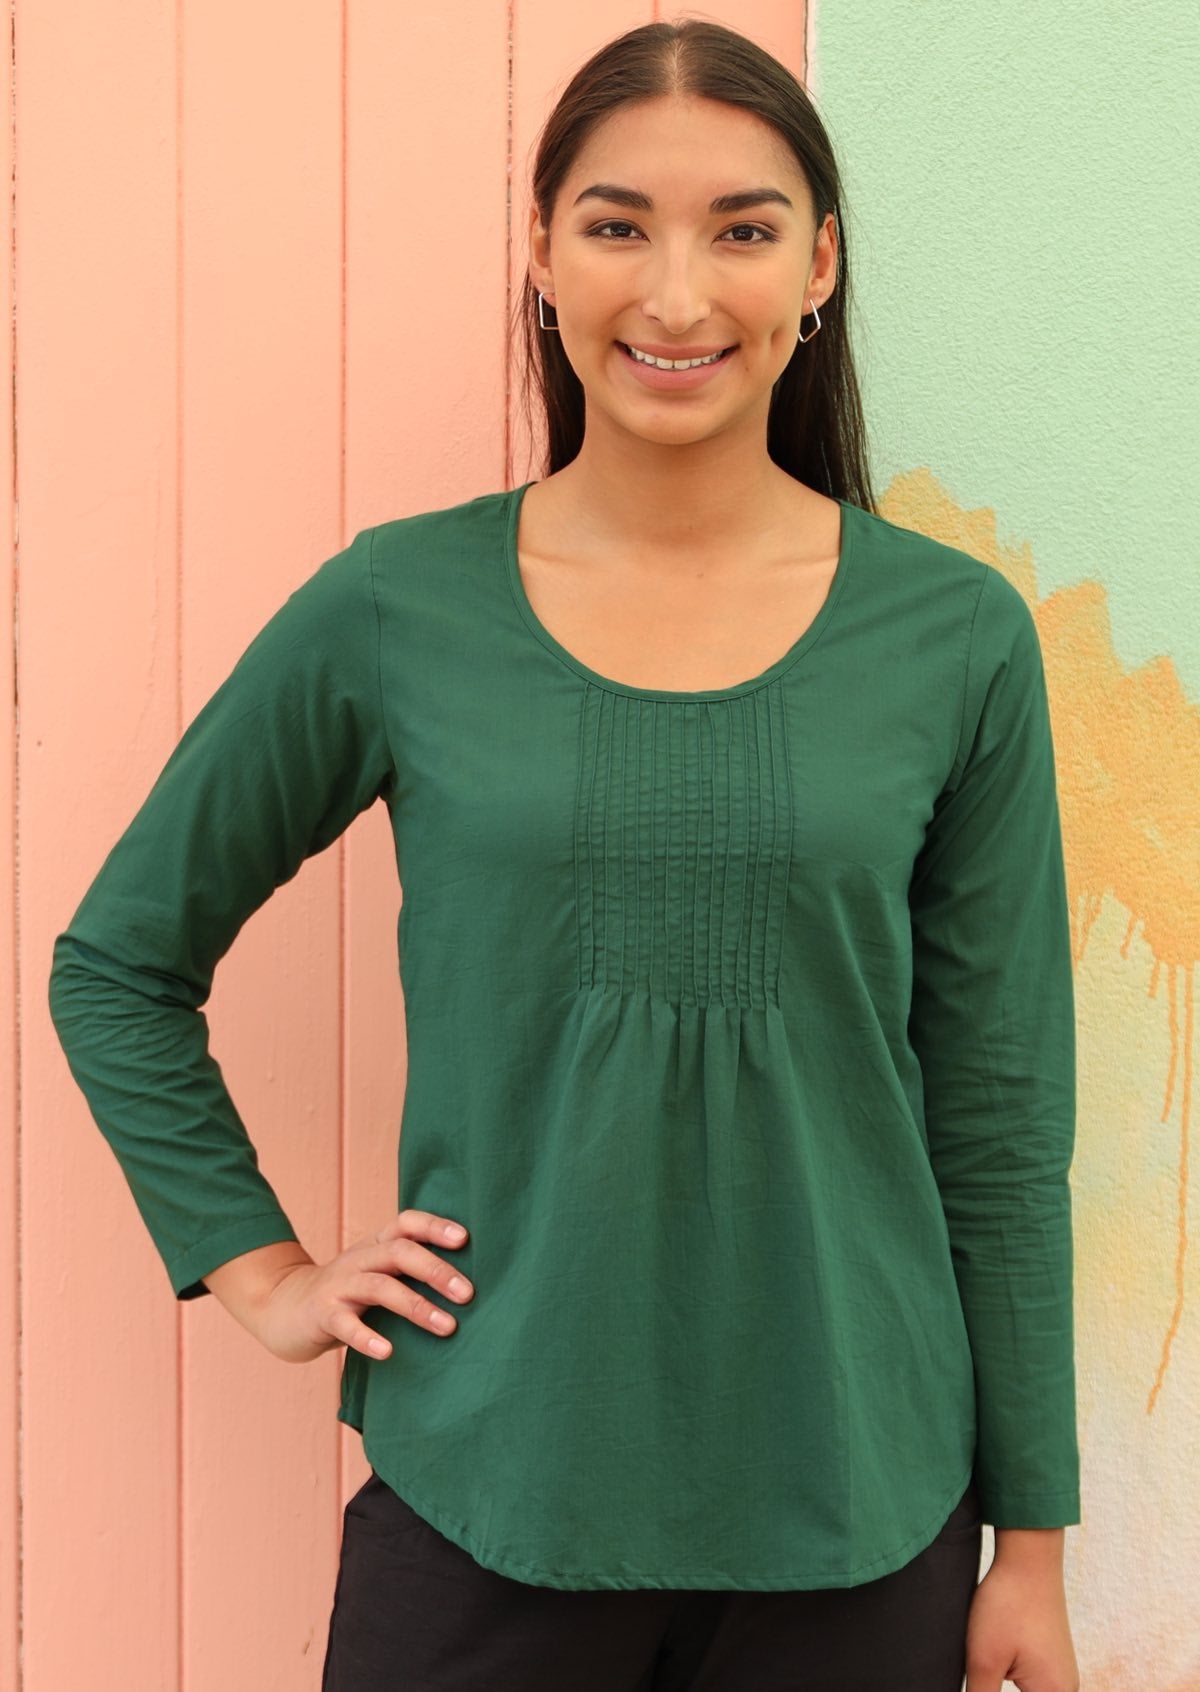 Model smiles in lightweight dark green long sleeve cotton top